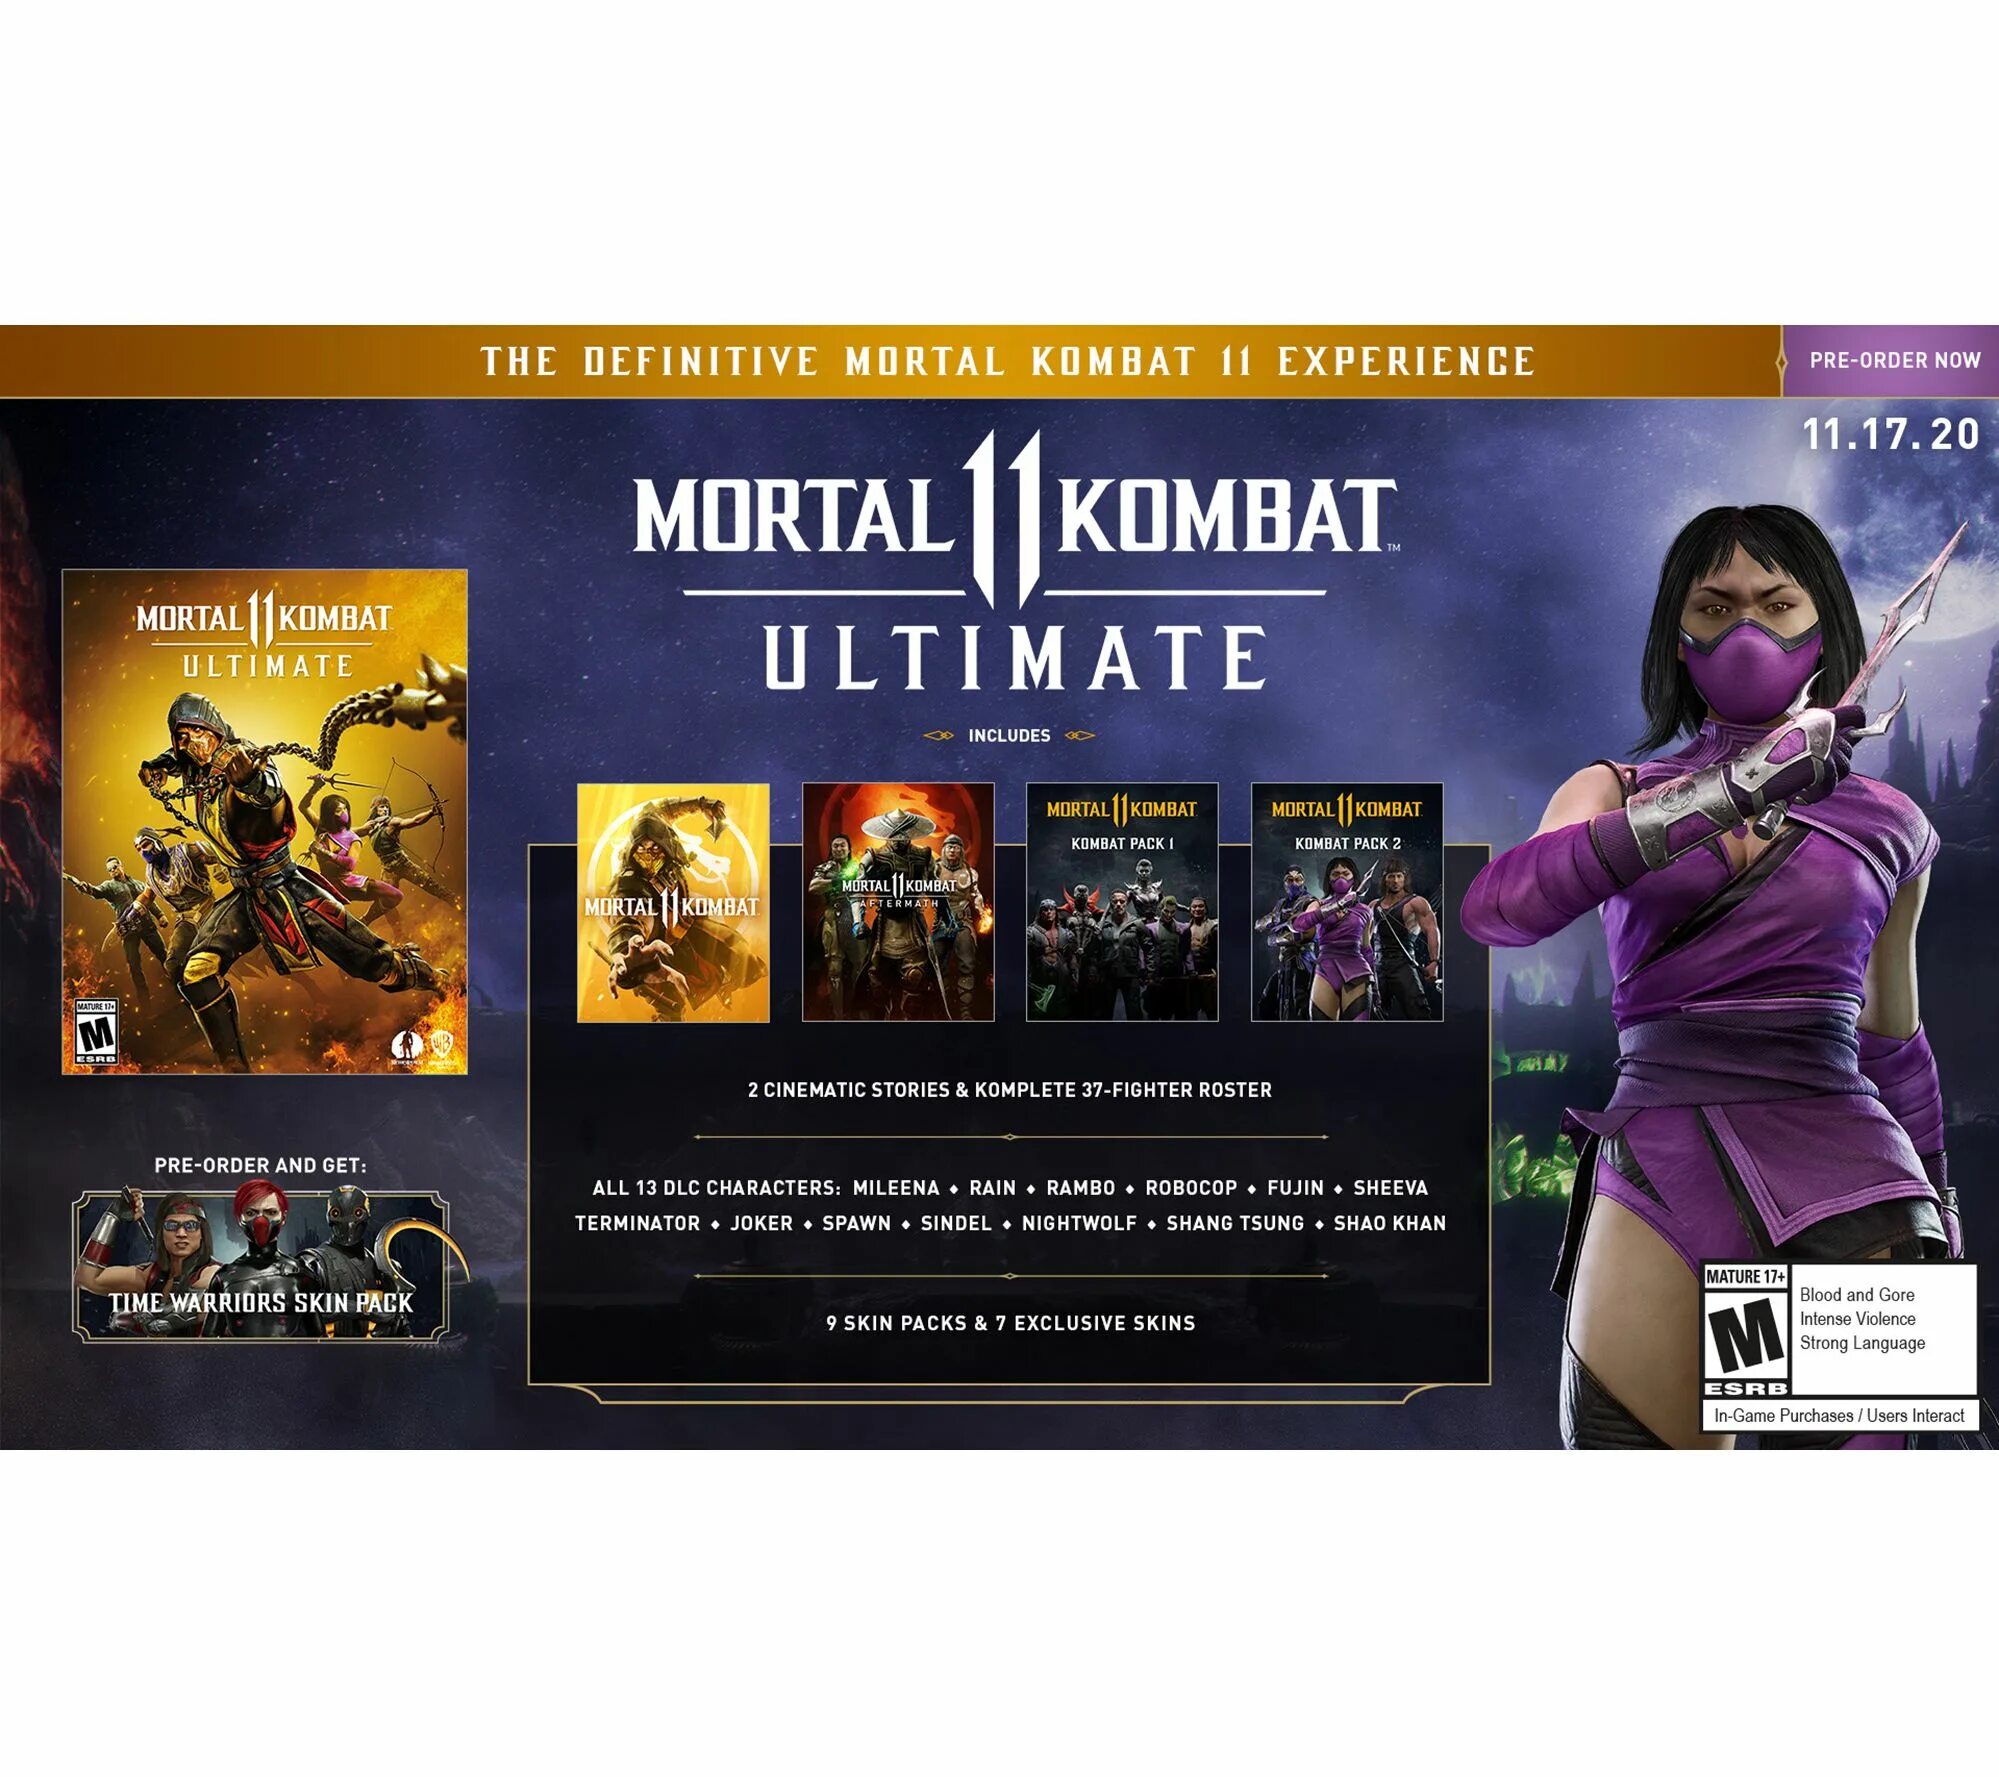 Ps5 mortal kombat купить. Mortal Kombat 11 Ultimate Edition. Mortal Kombat 11 Ultimate. Коллекционное издание. Mortal Kombat 11 Ultimate Xbox one. Ps5 mk11 Ultimate.